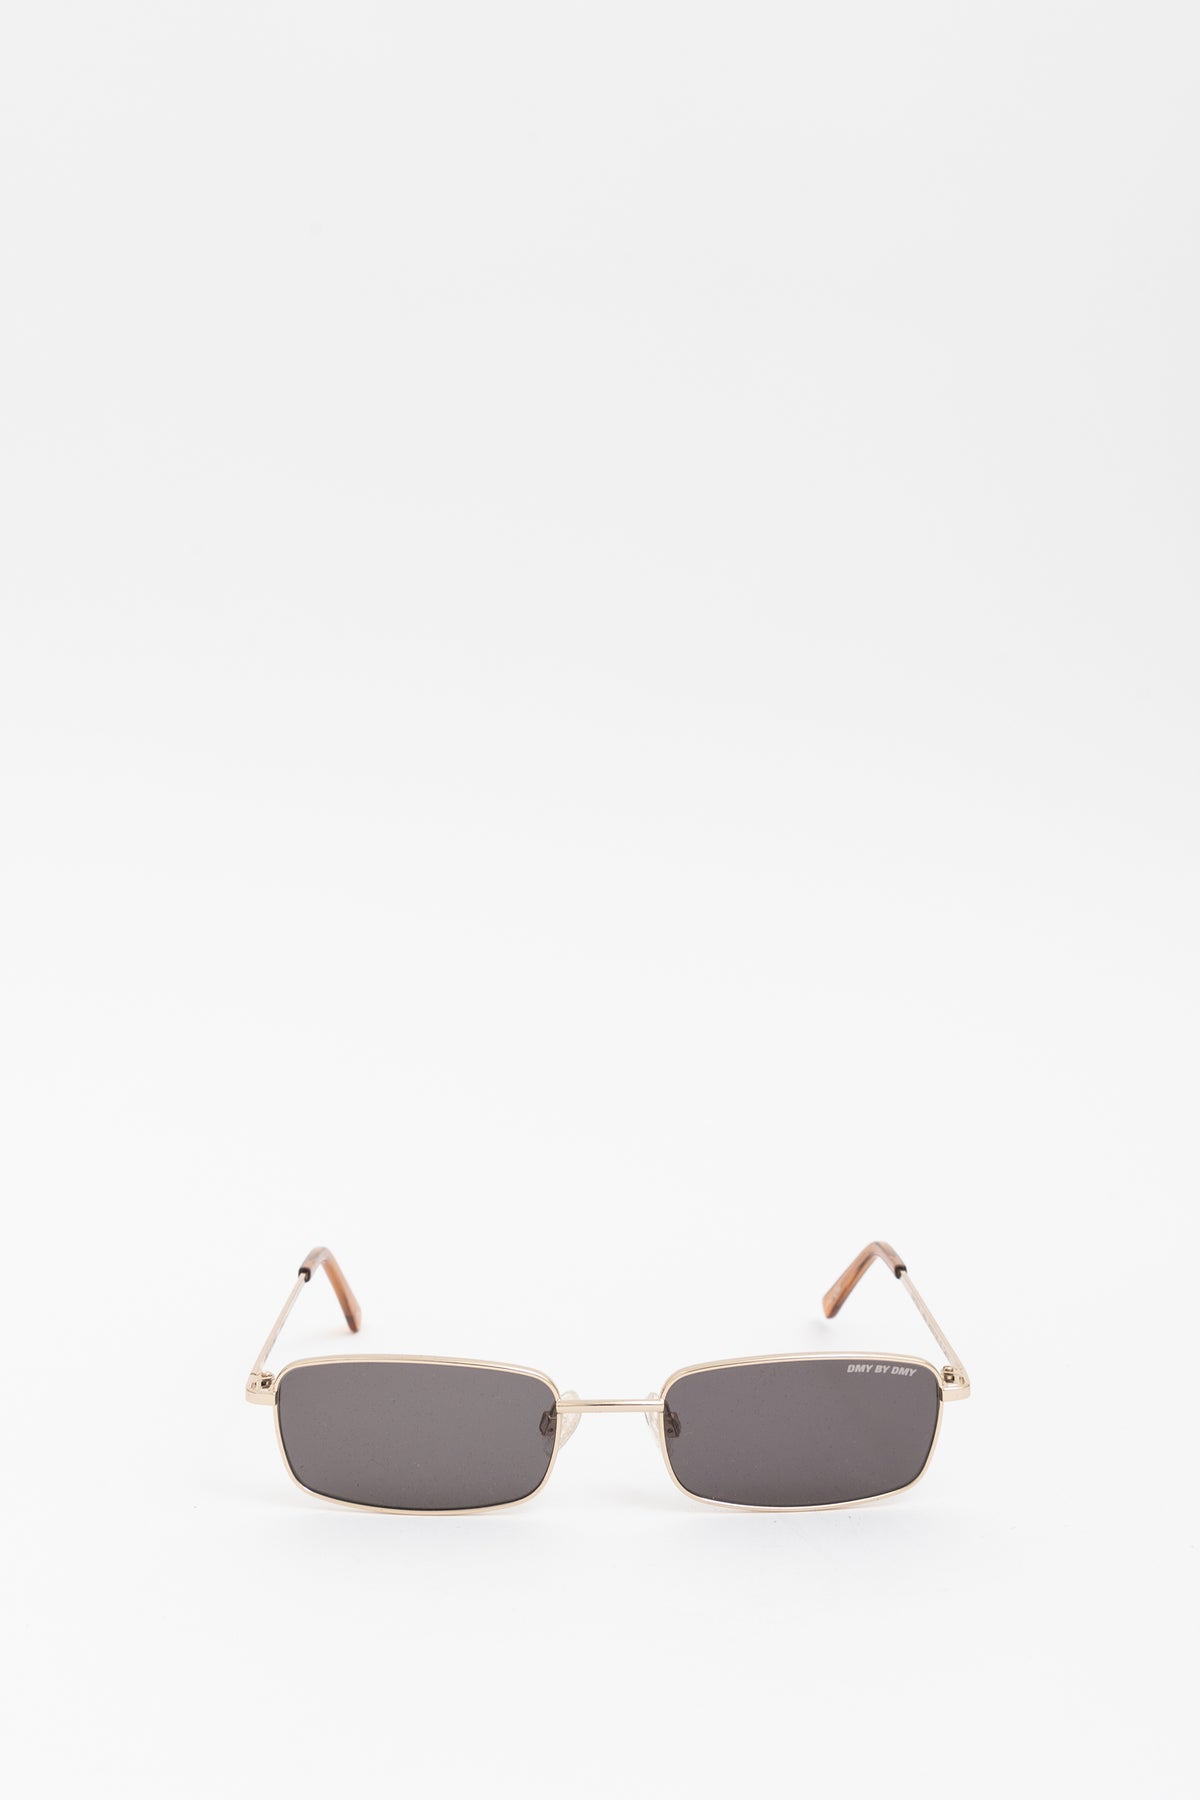 DMY by DMY Gold Rectangle Frame Olsen Sunglasses